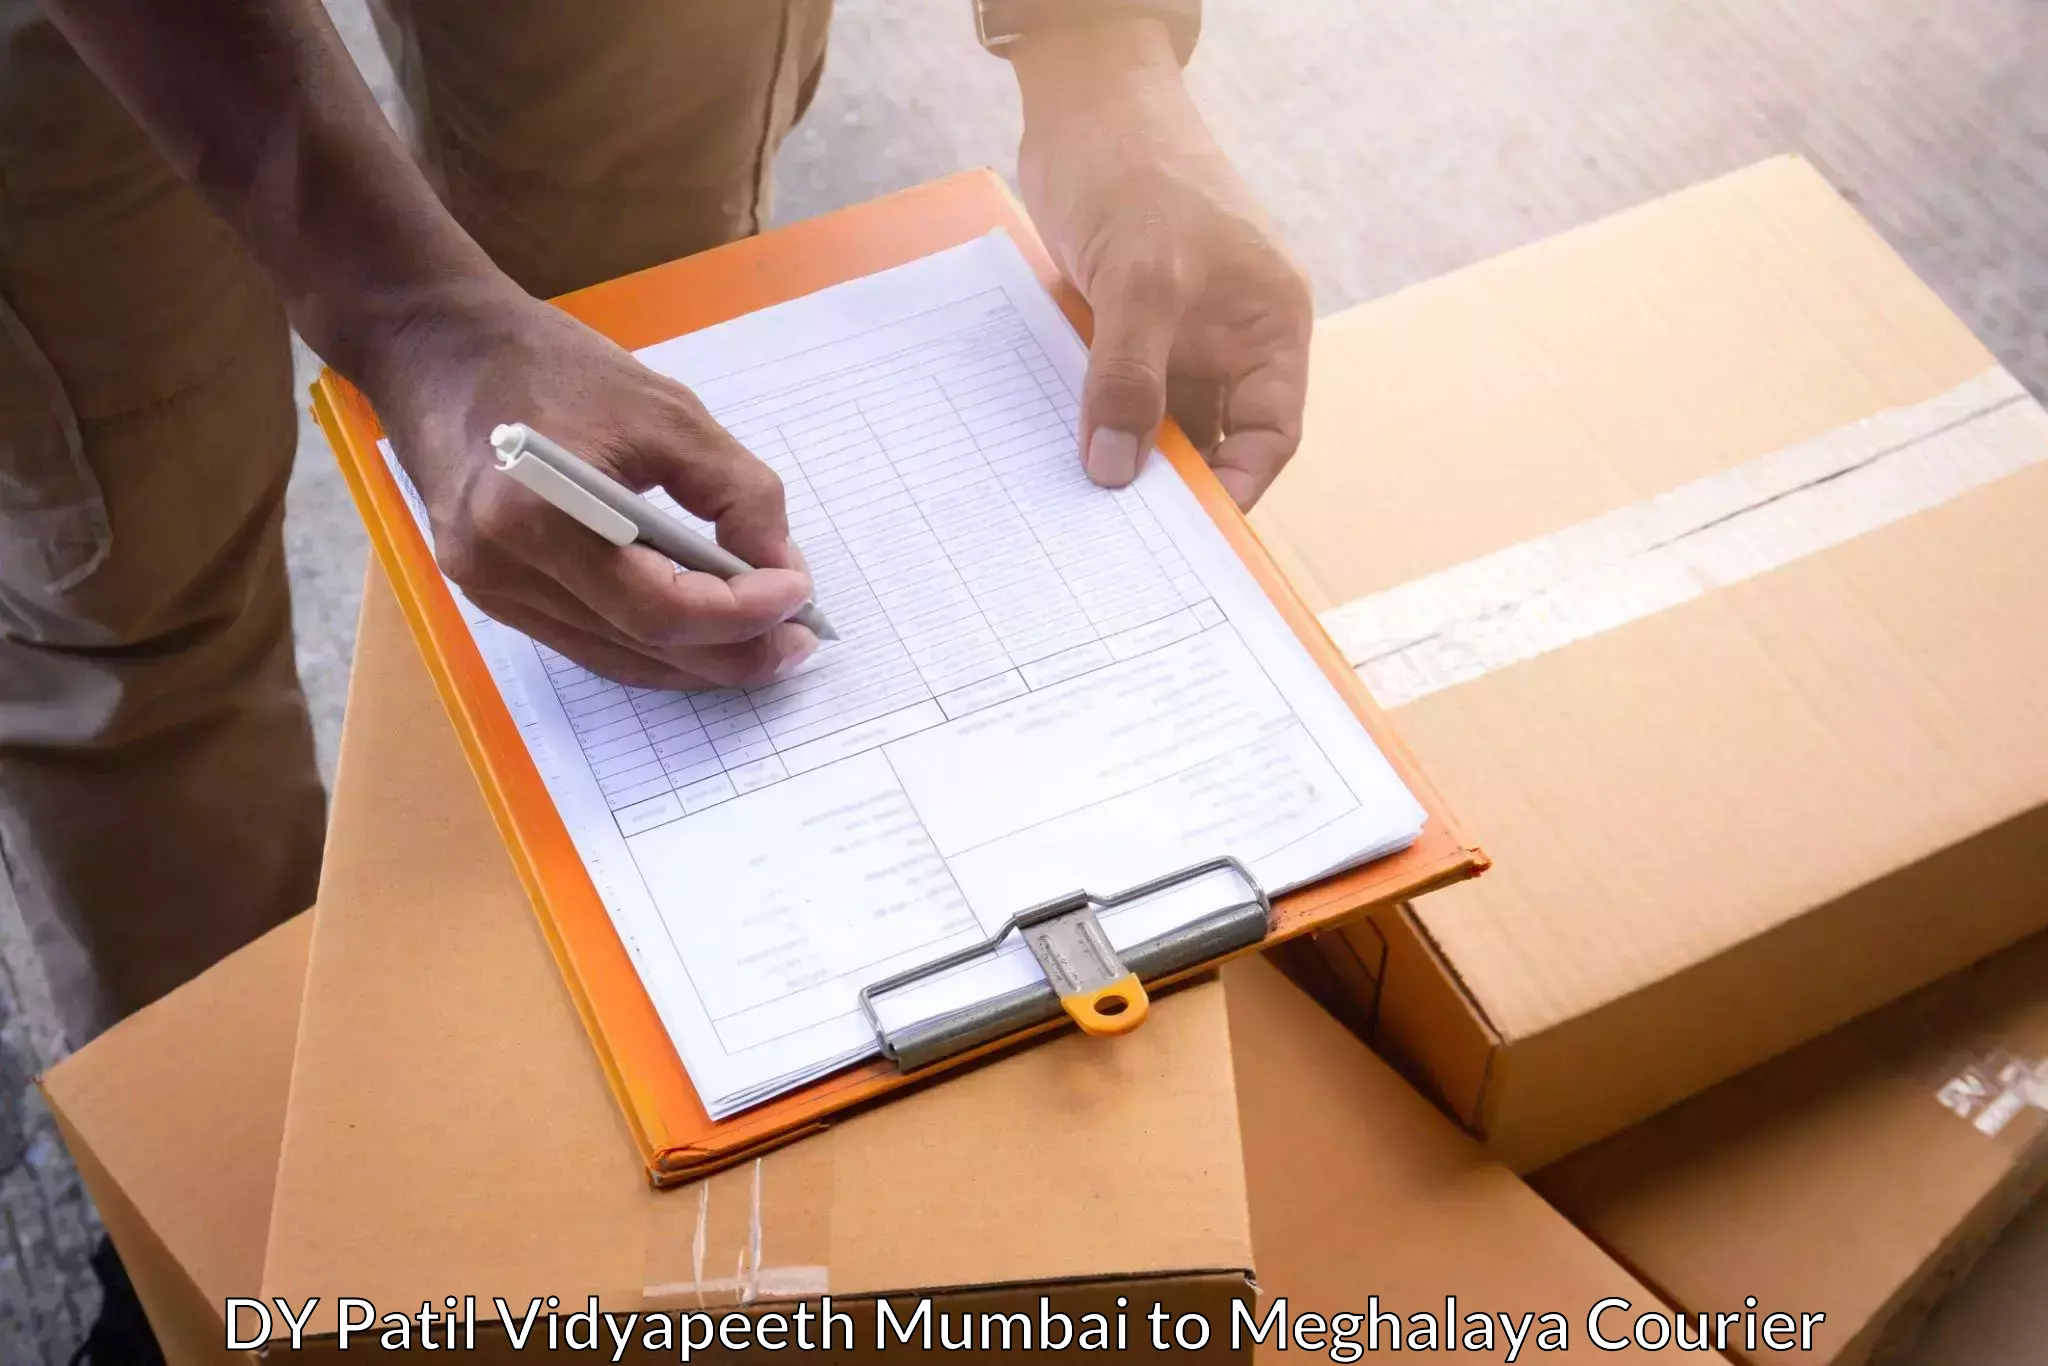 Courier service comparison DY Patil Vidyapeeth Mumbai to Meghalaya